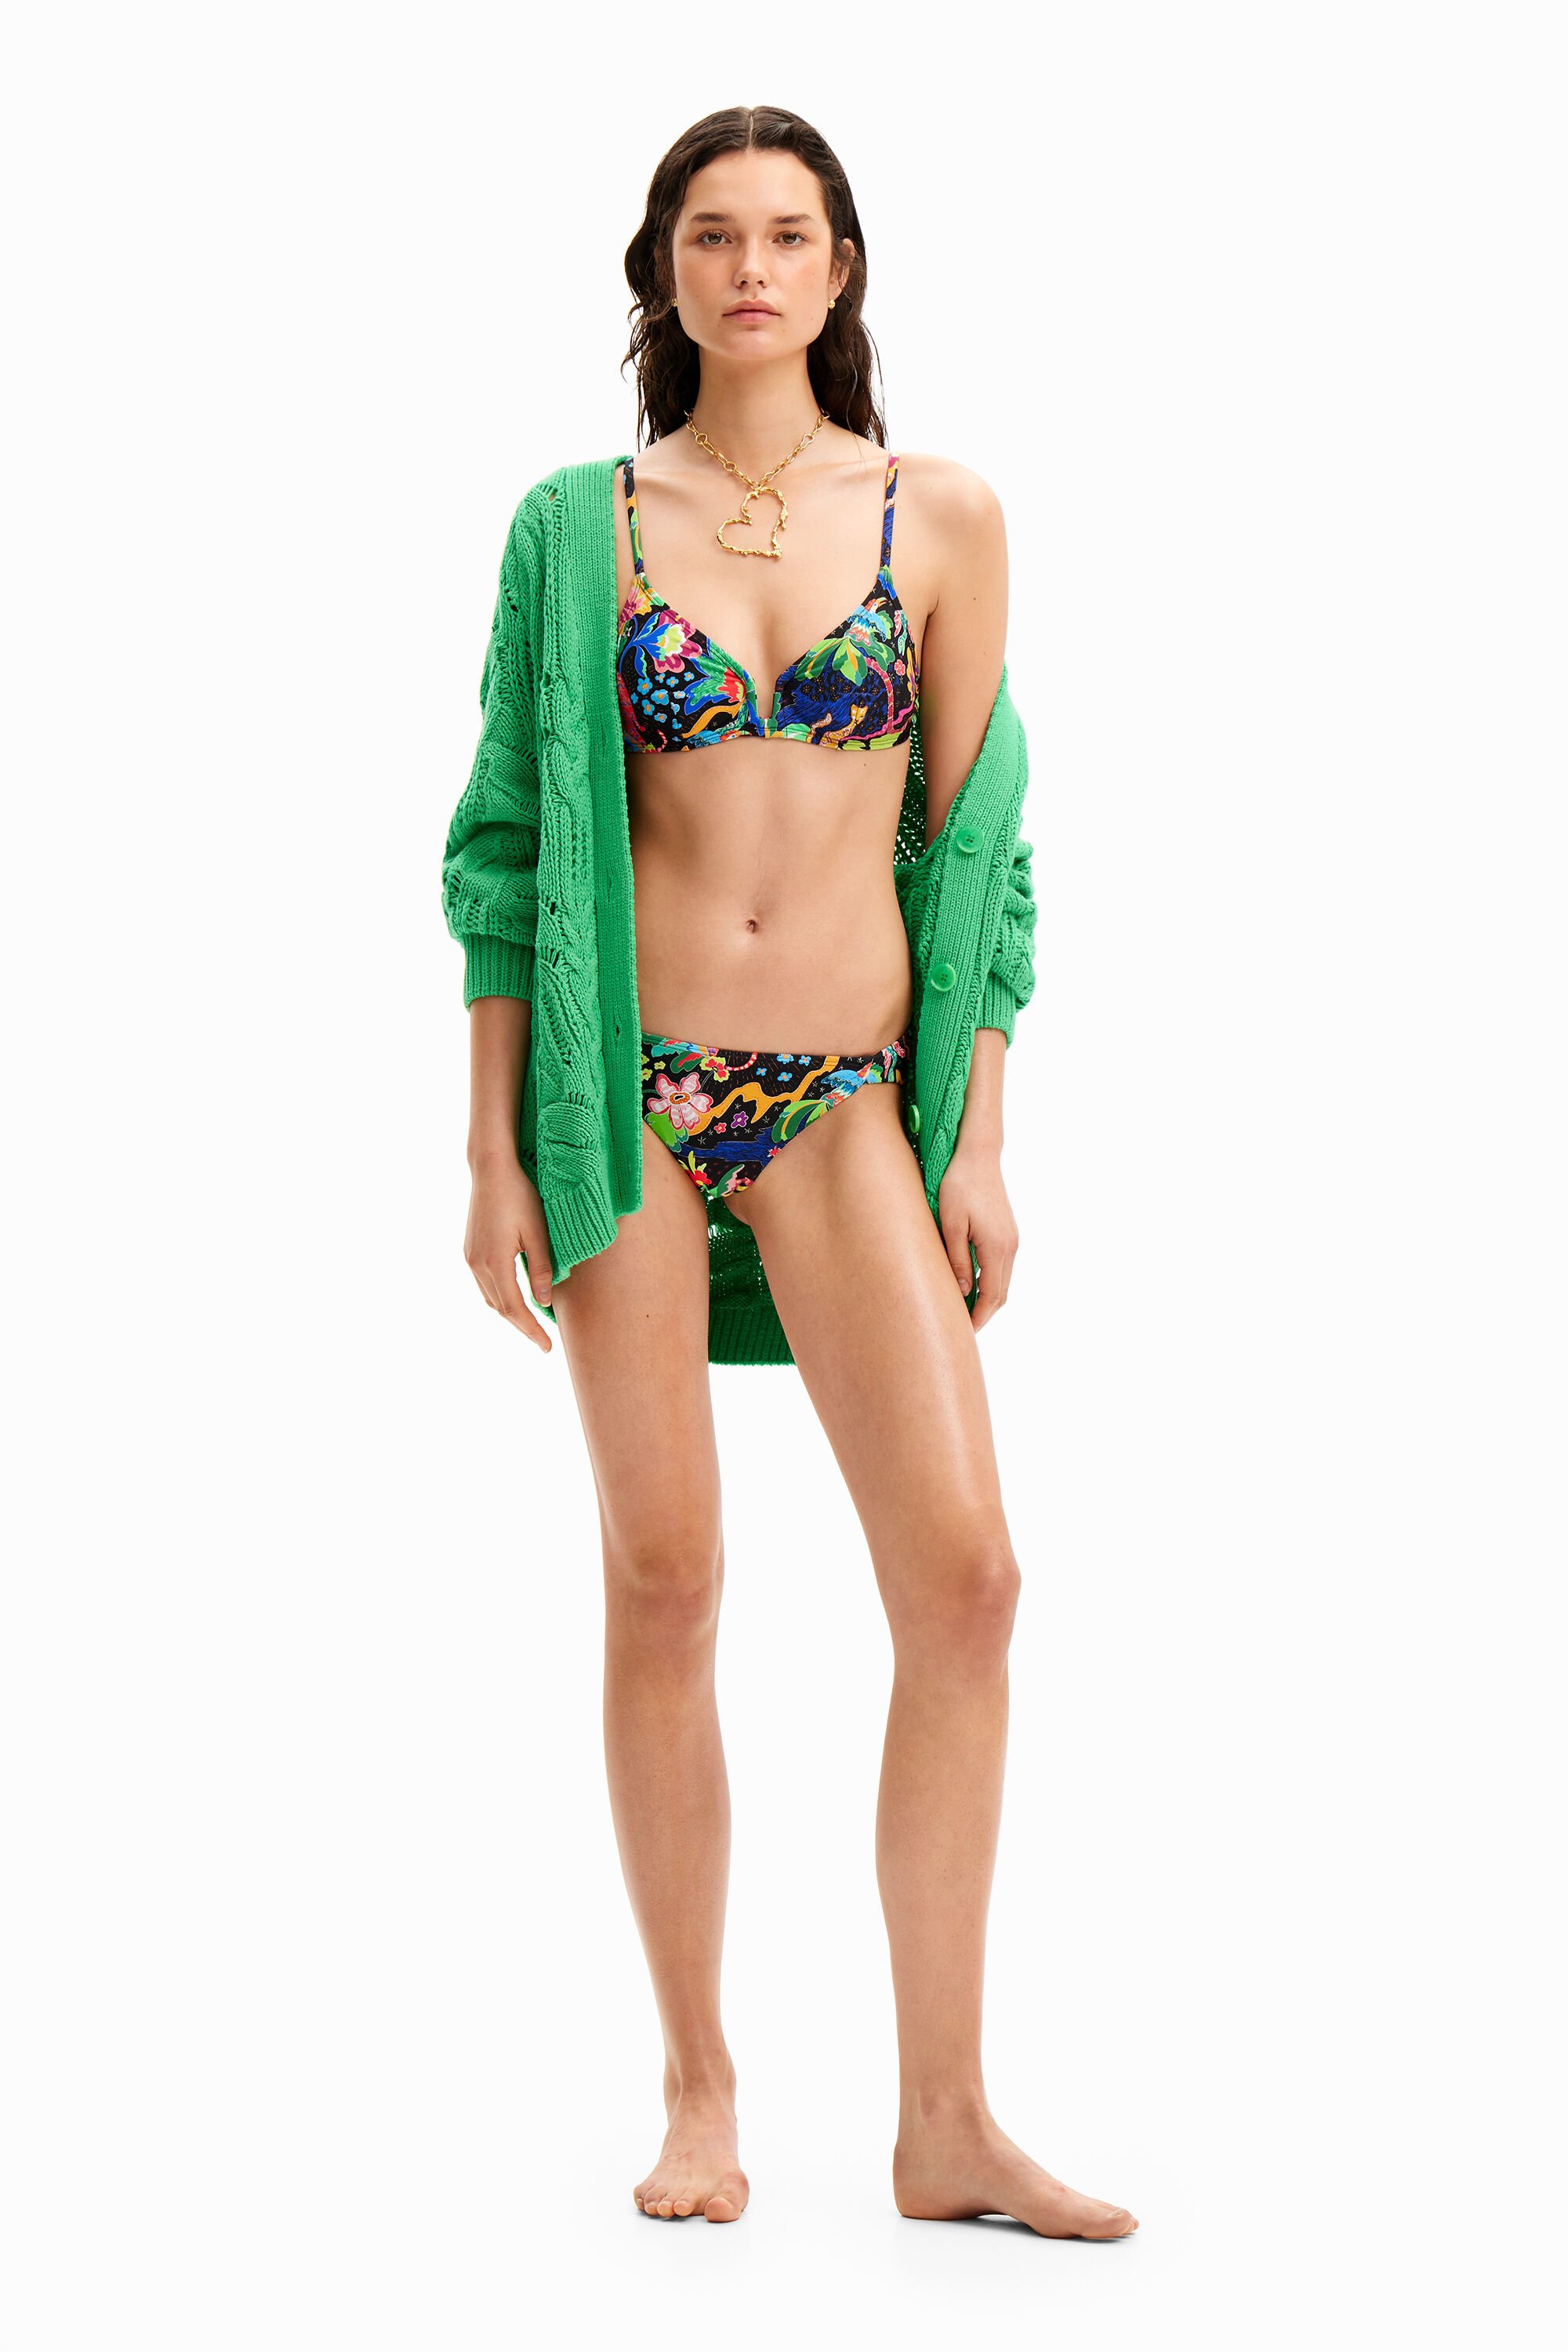 Desigual Jungle design bikini bottoms